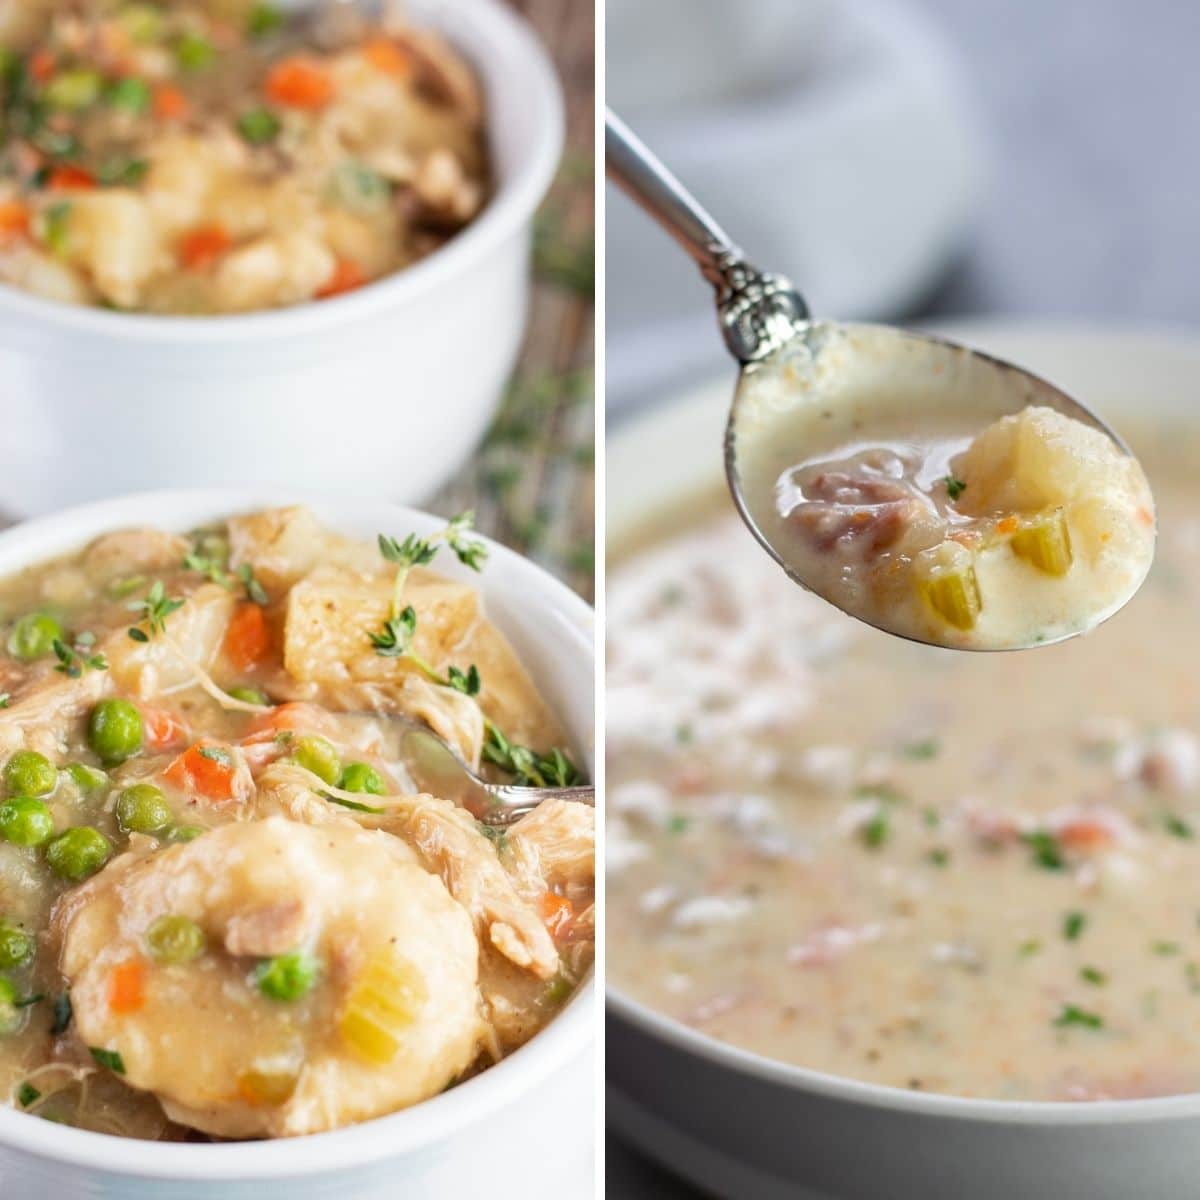 Resep 'sup crockpot' paling teruji dengan 2 gambar kolase foto sop yang disajikan dalam mangkuk putih.